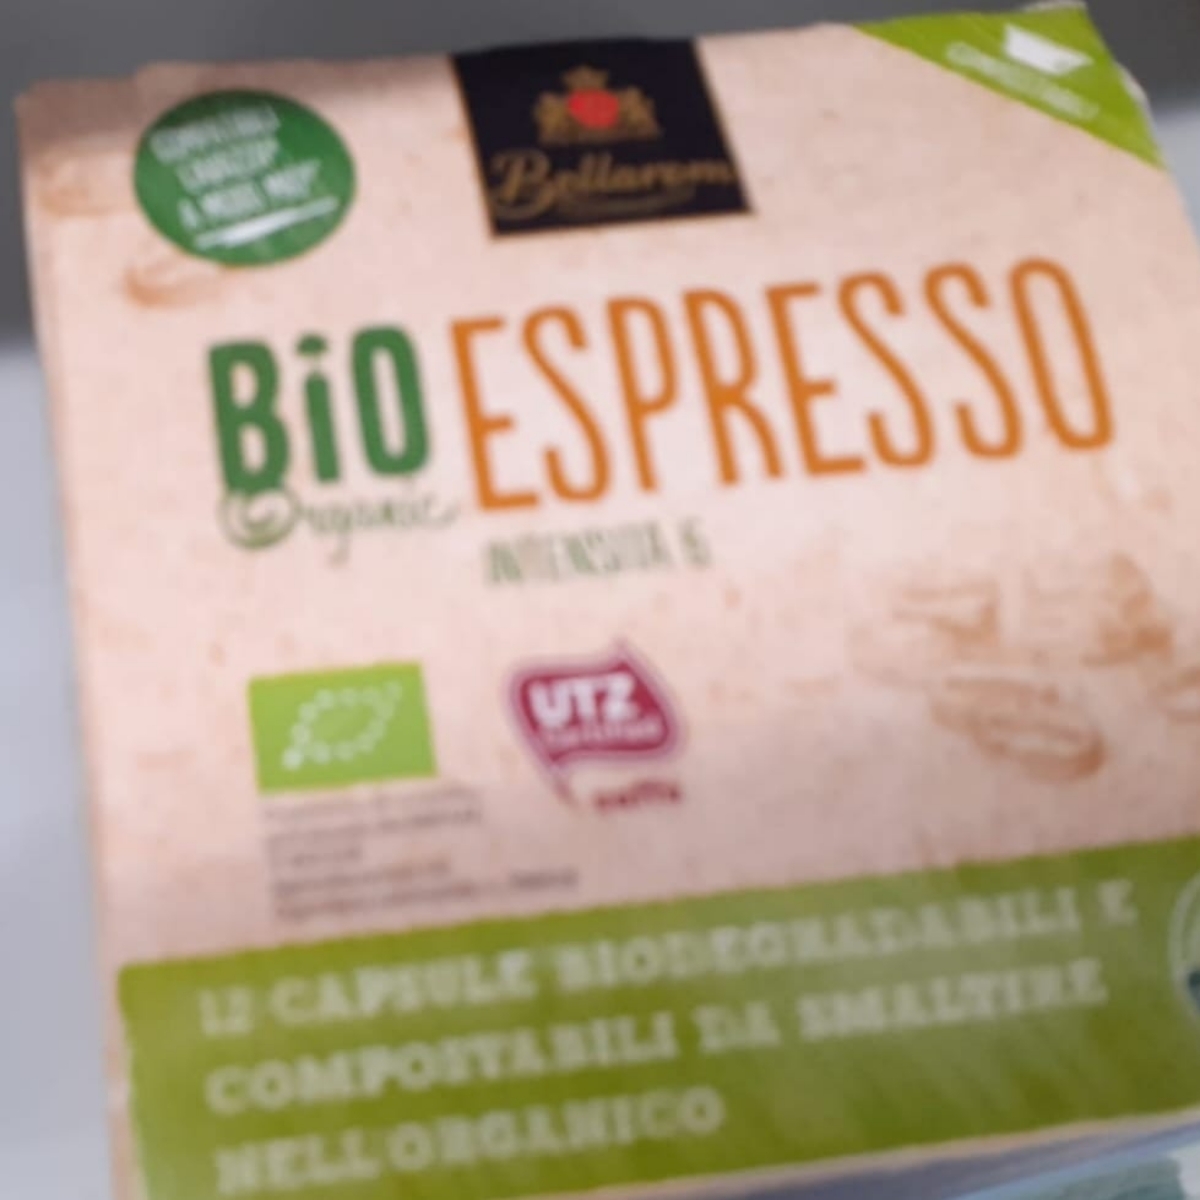 Bellarom Espresso intenso Reviews | abillion